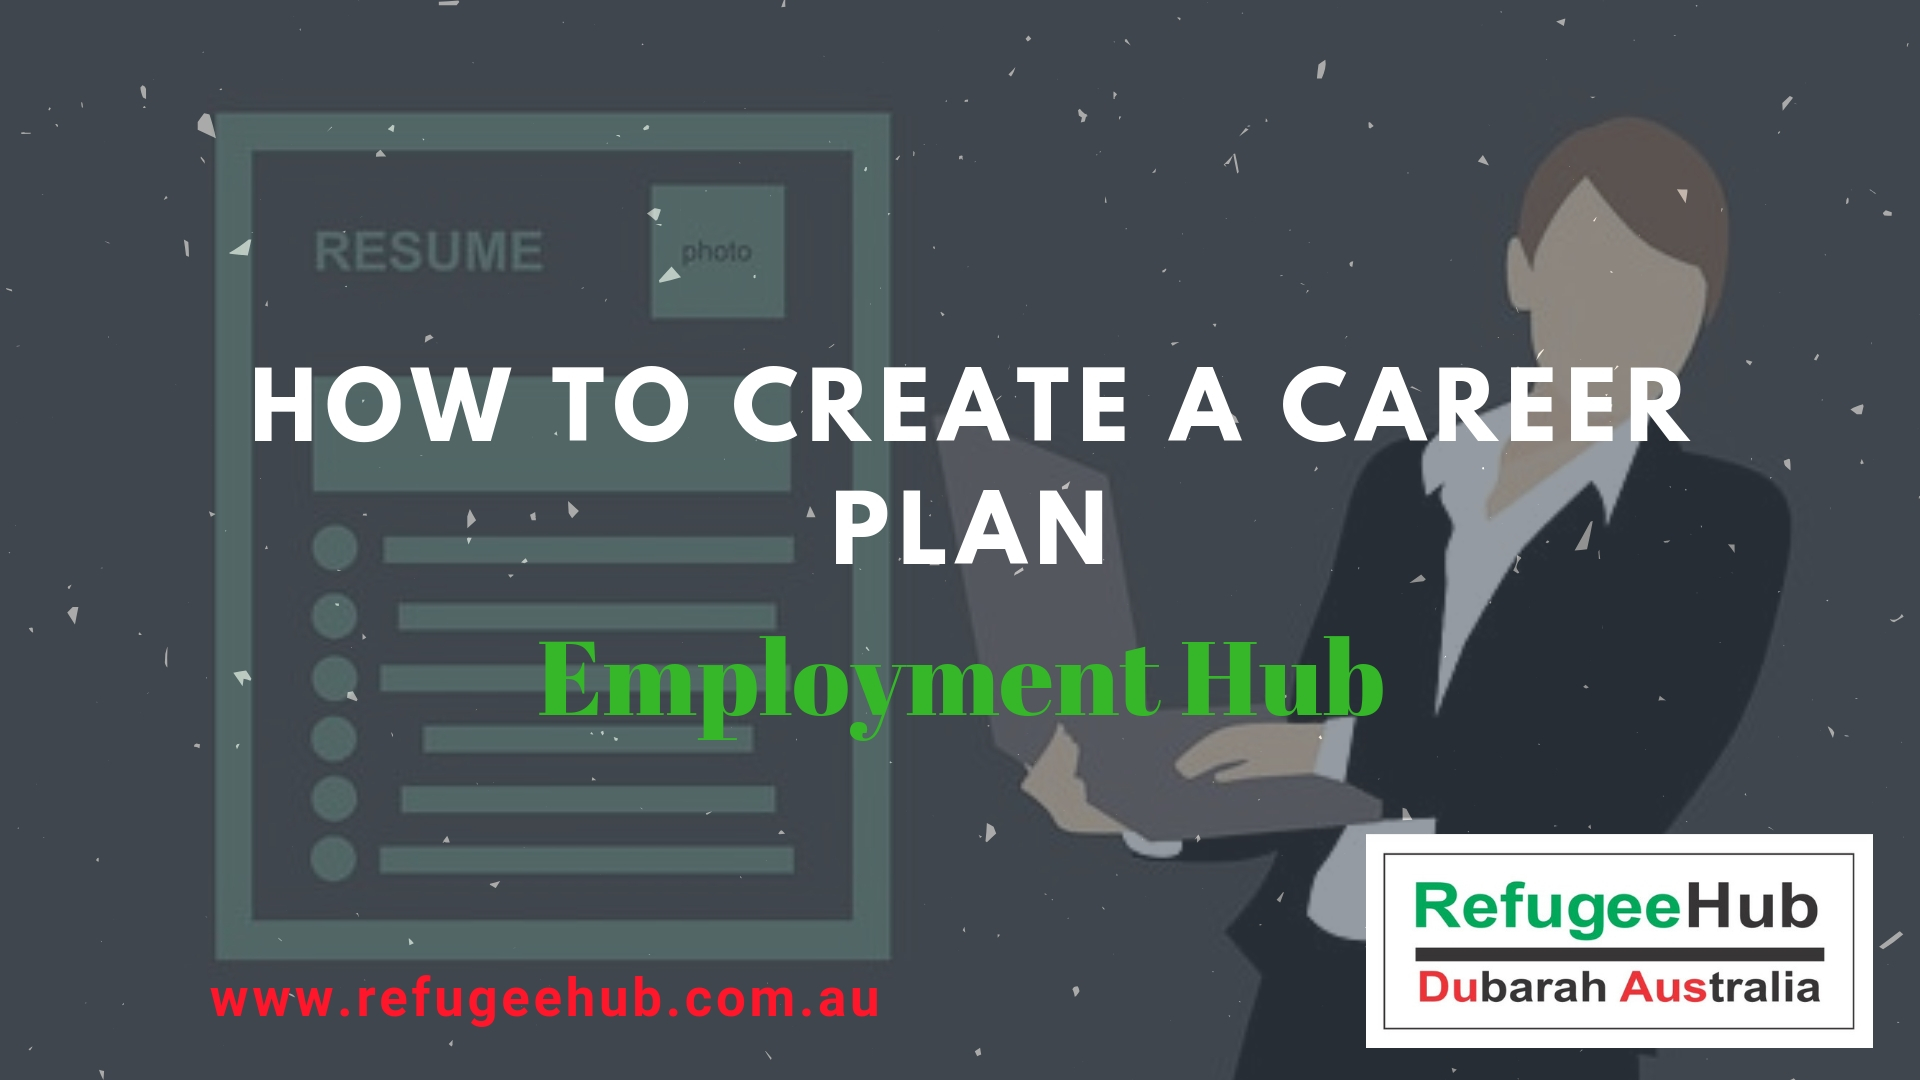 How to create a career plan